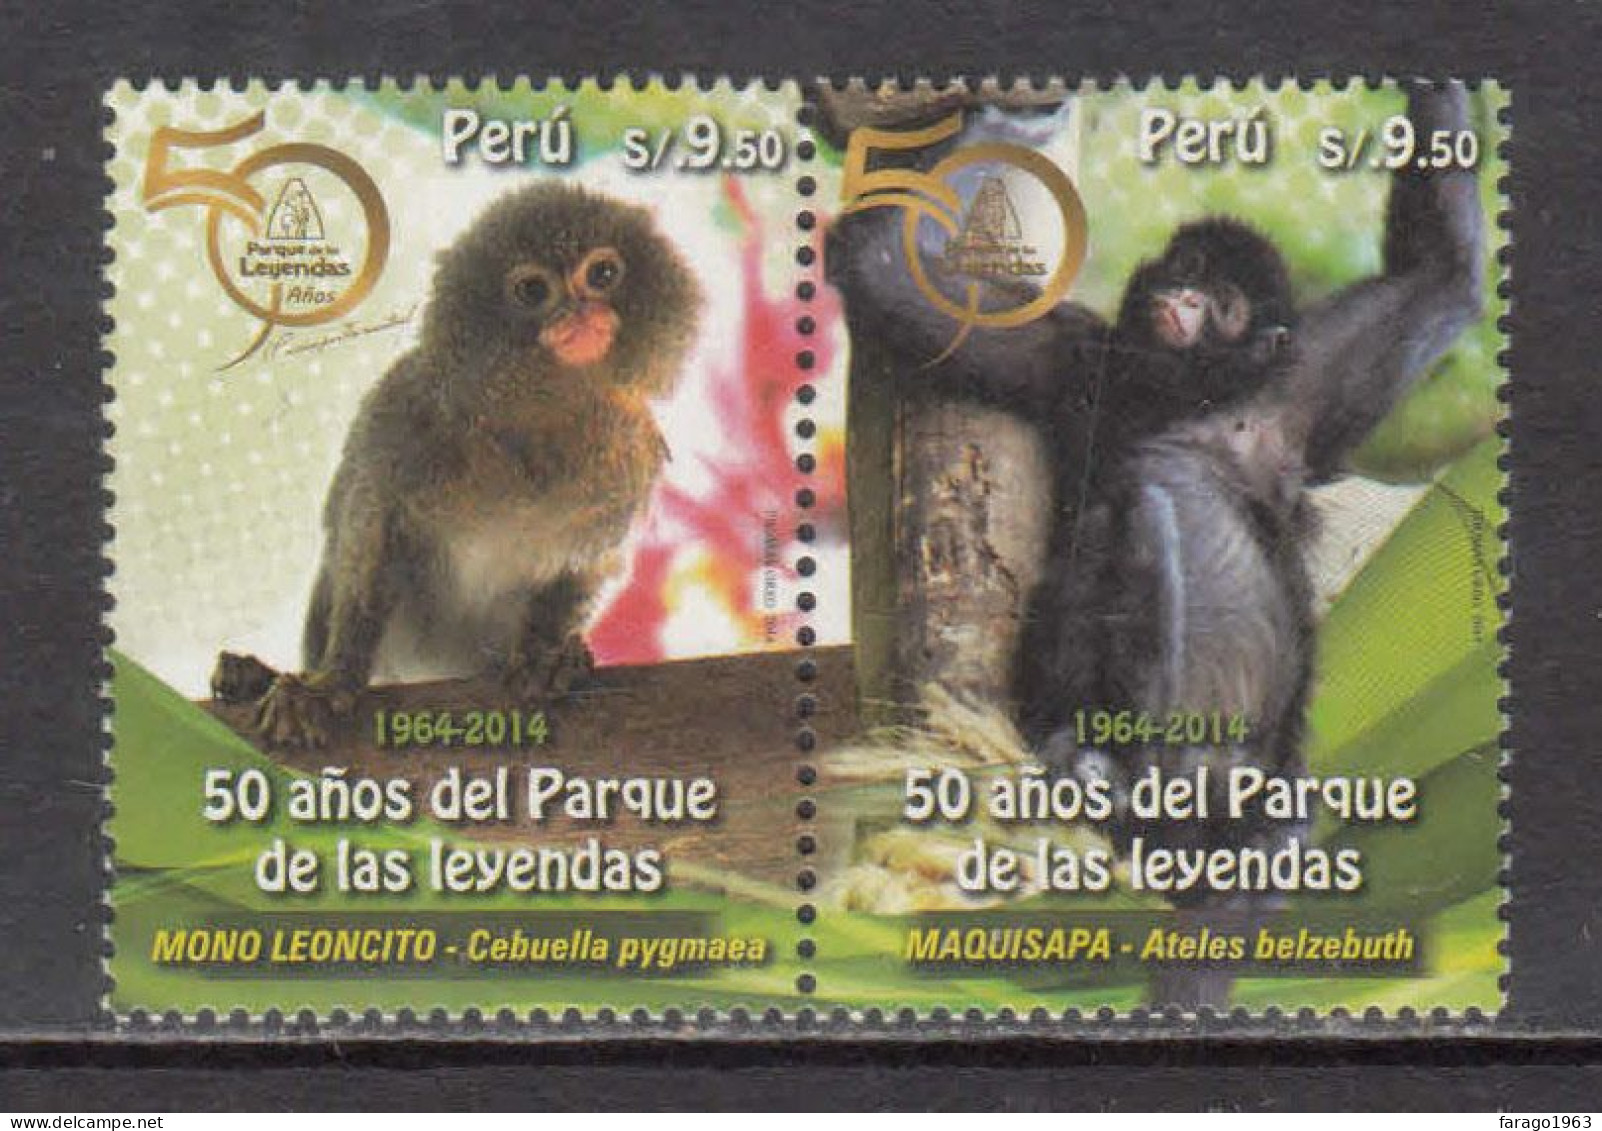 2014 Peru Leyendas Zoo Monkeys Primates Complete Pair  MNH - Peru